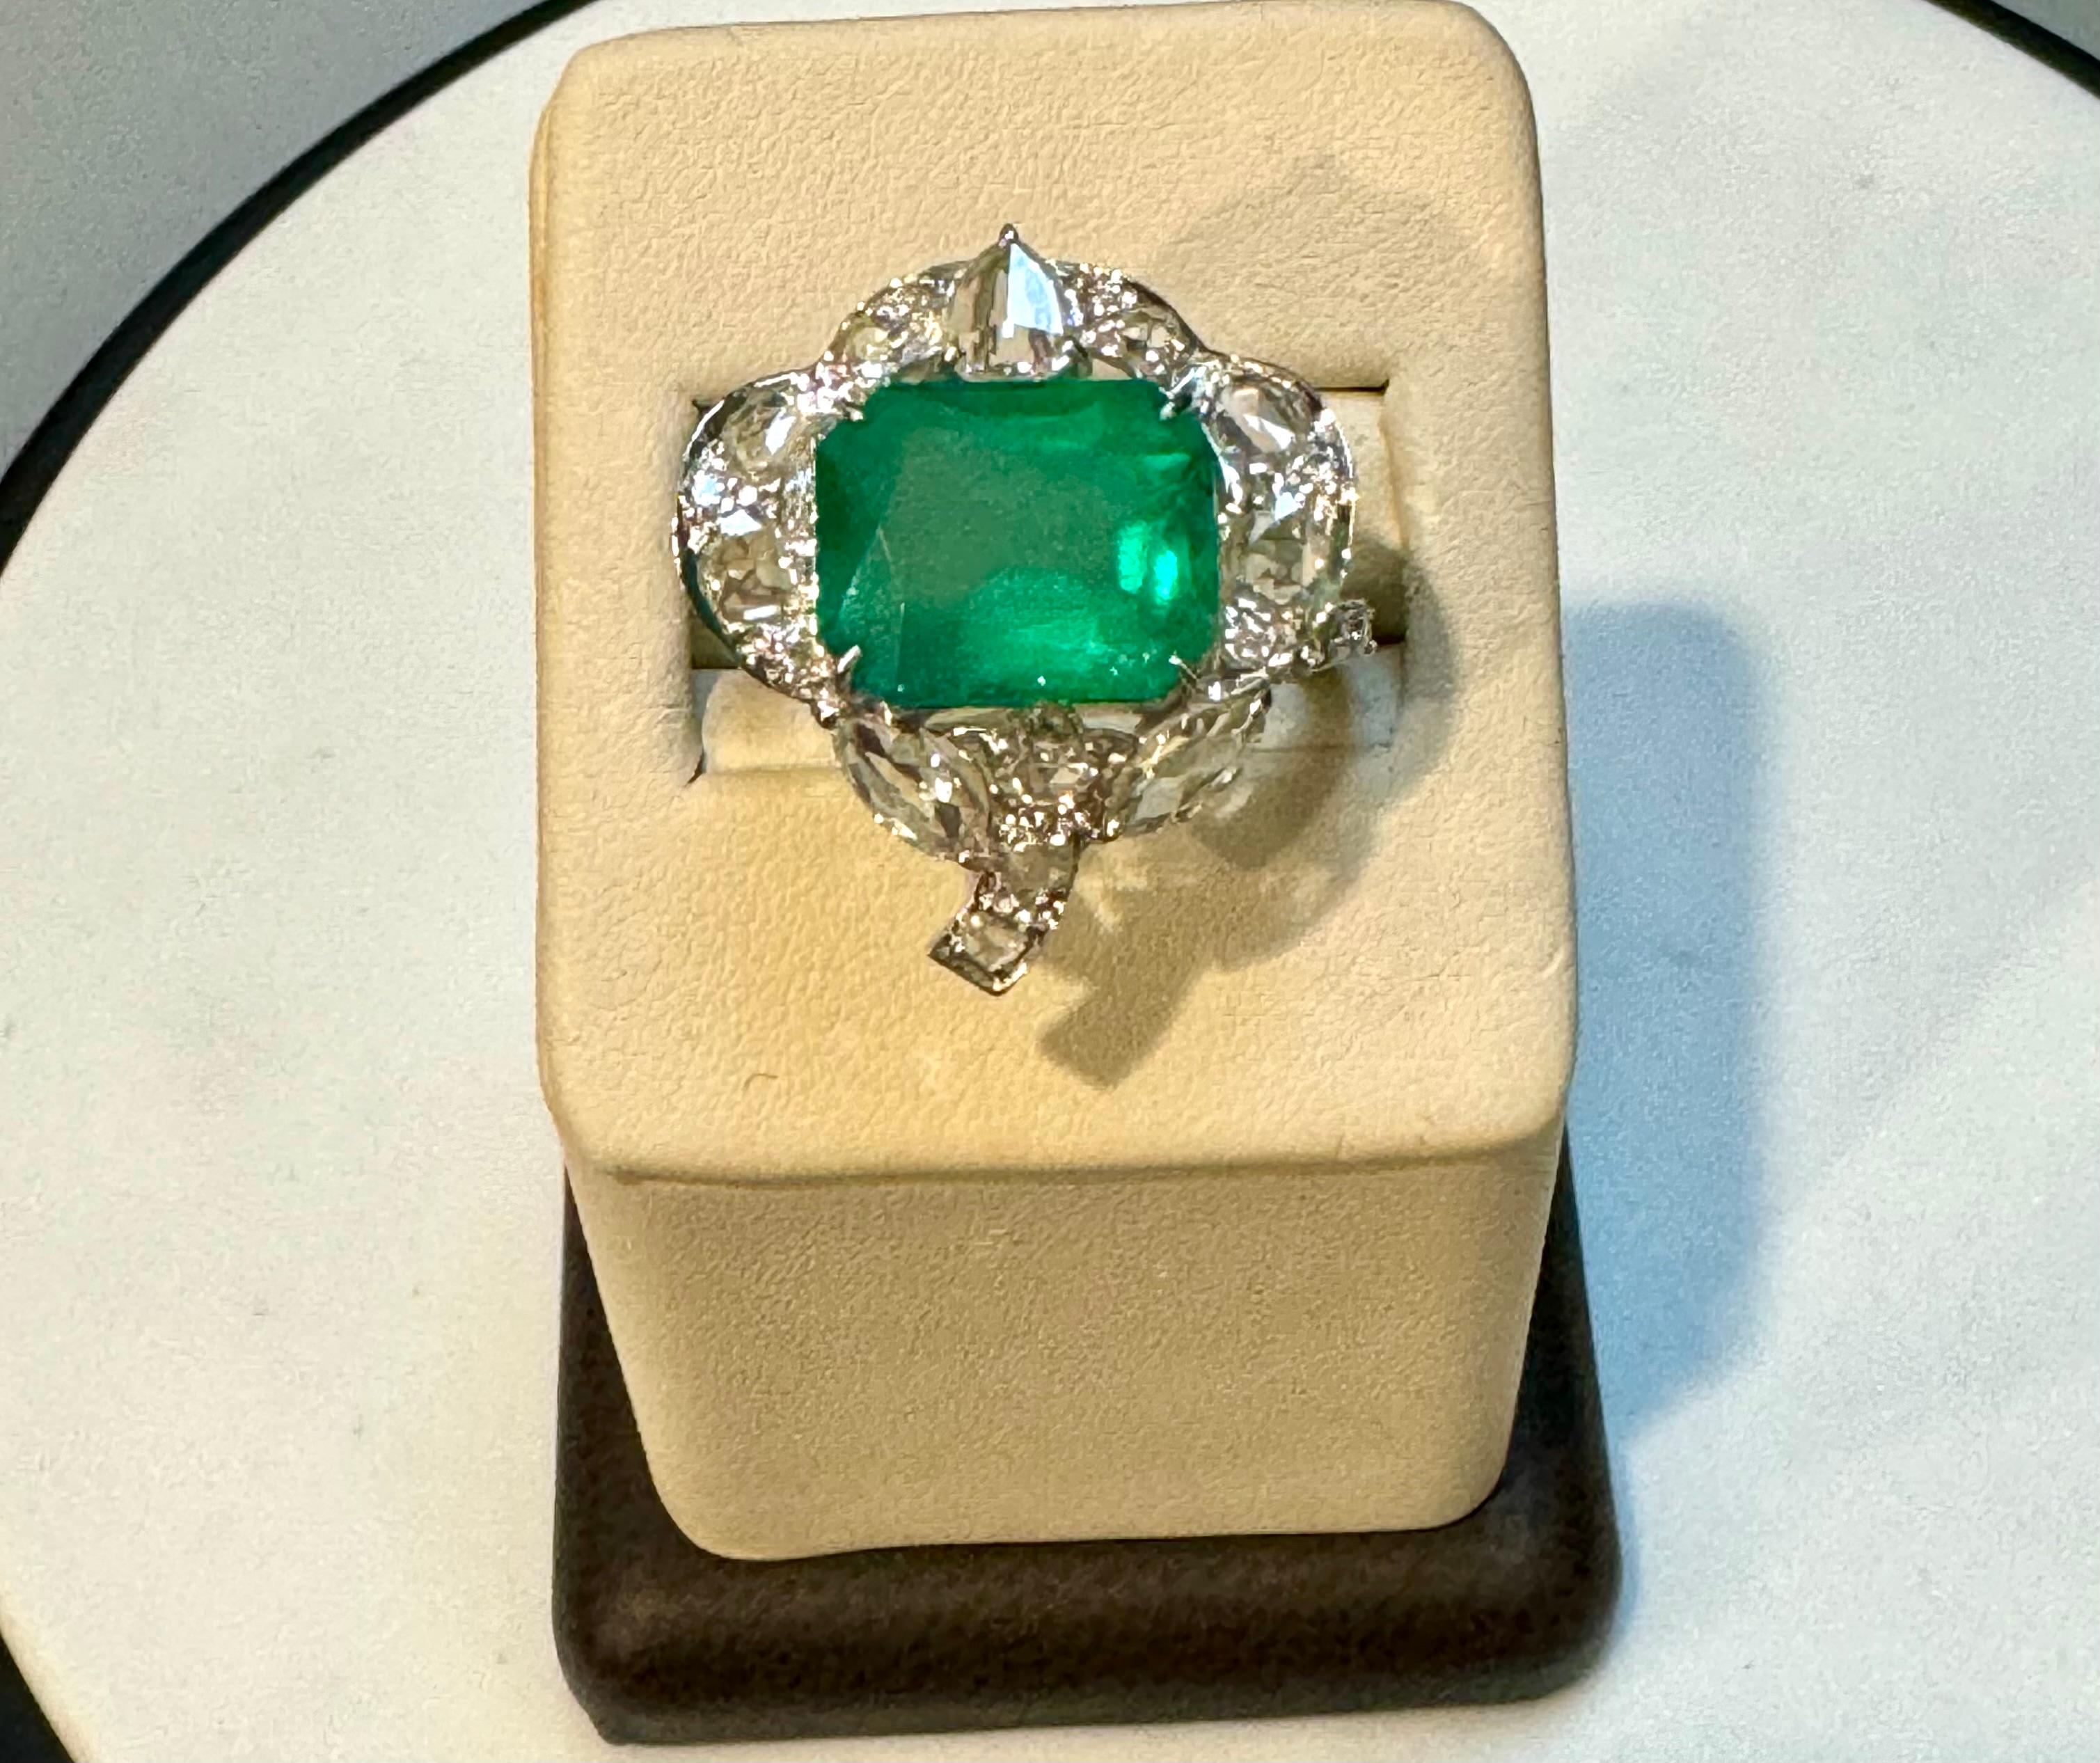 7 Ct Finest Zambian Emerald Cut Emerald & 1.5Ct Diamond Ring, 18 Kt Gold Size 9 For Sale 6